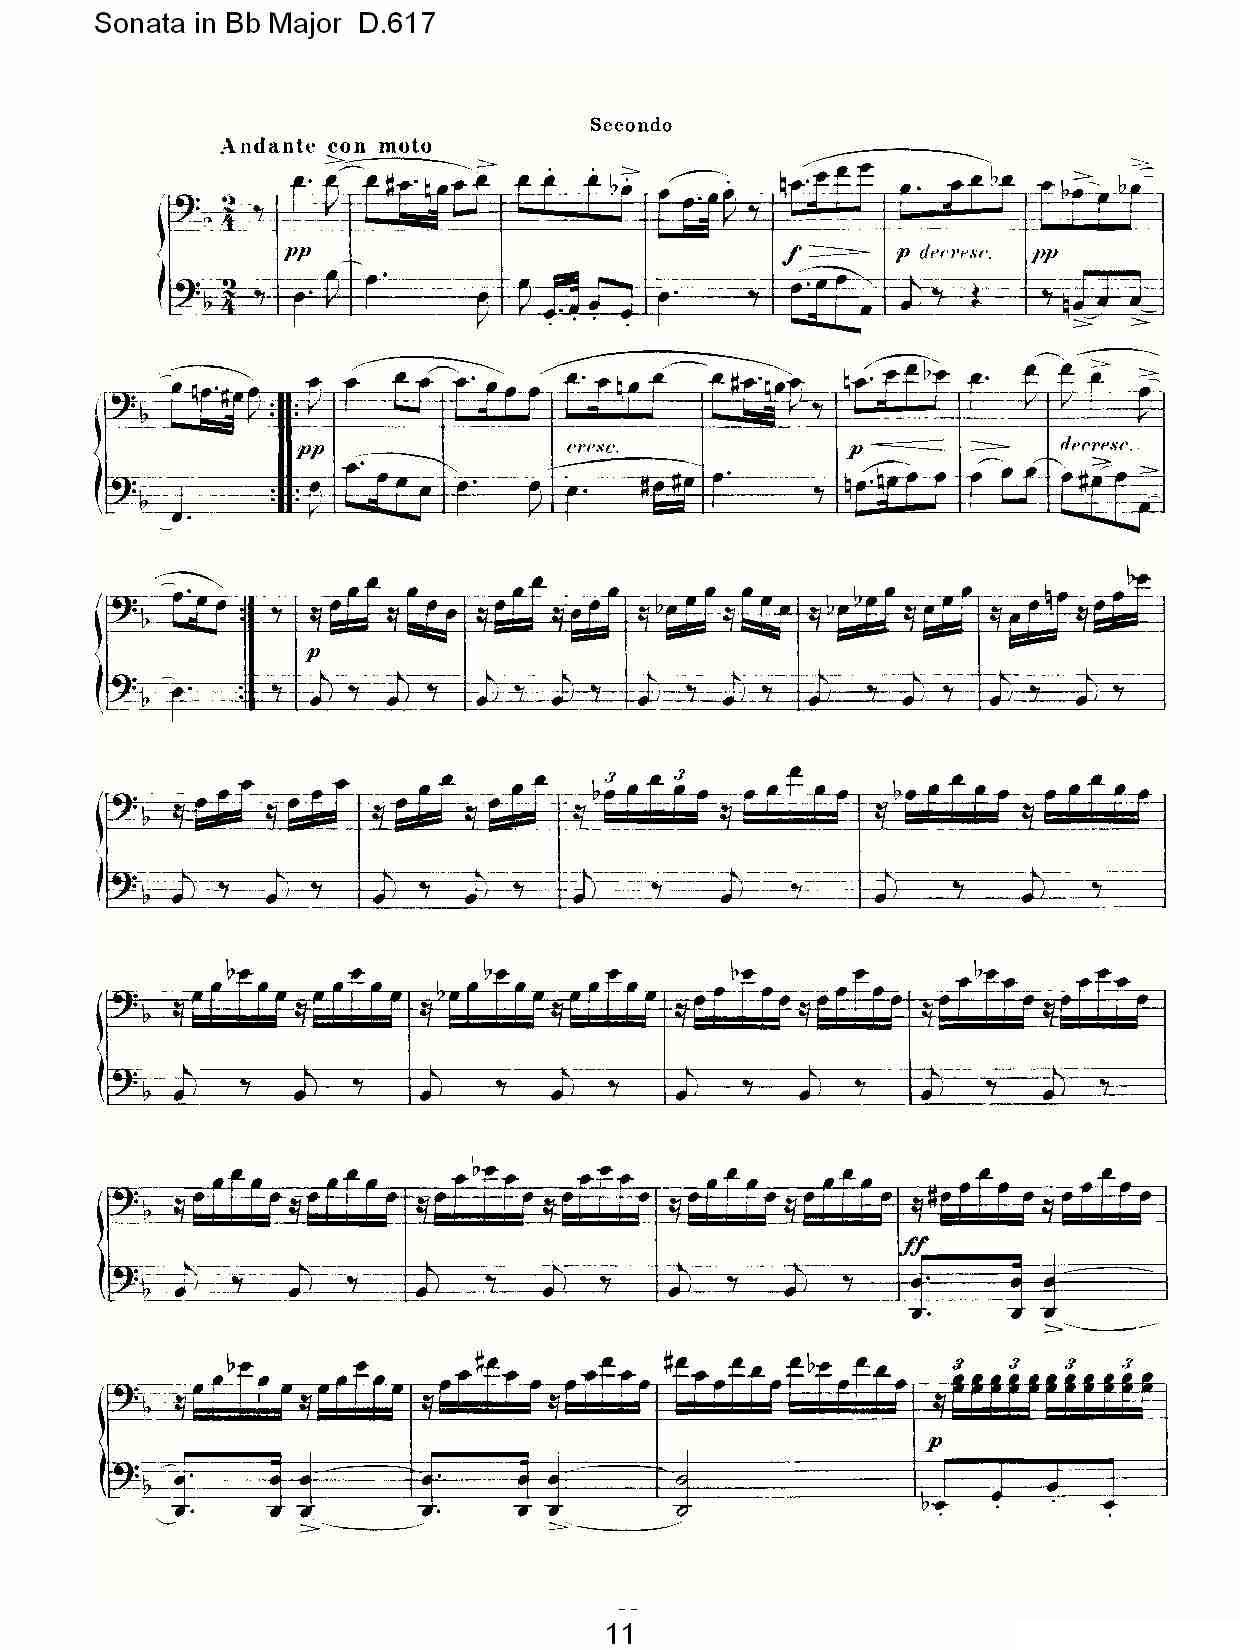 Sonata in Bb Major D.617（Bb大调奏鸣曲 D.617）钢琴曲谱（图11）